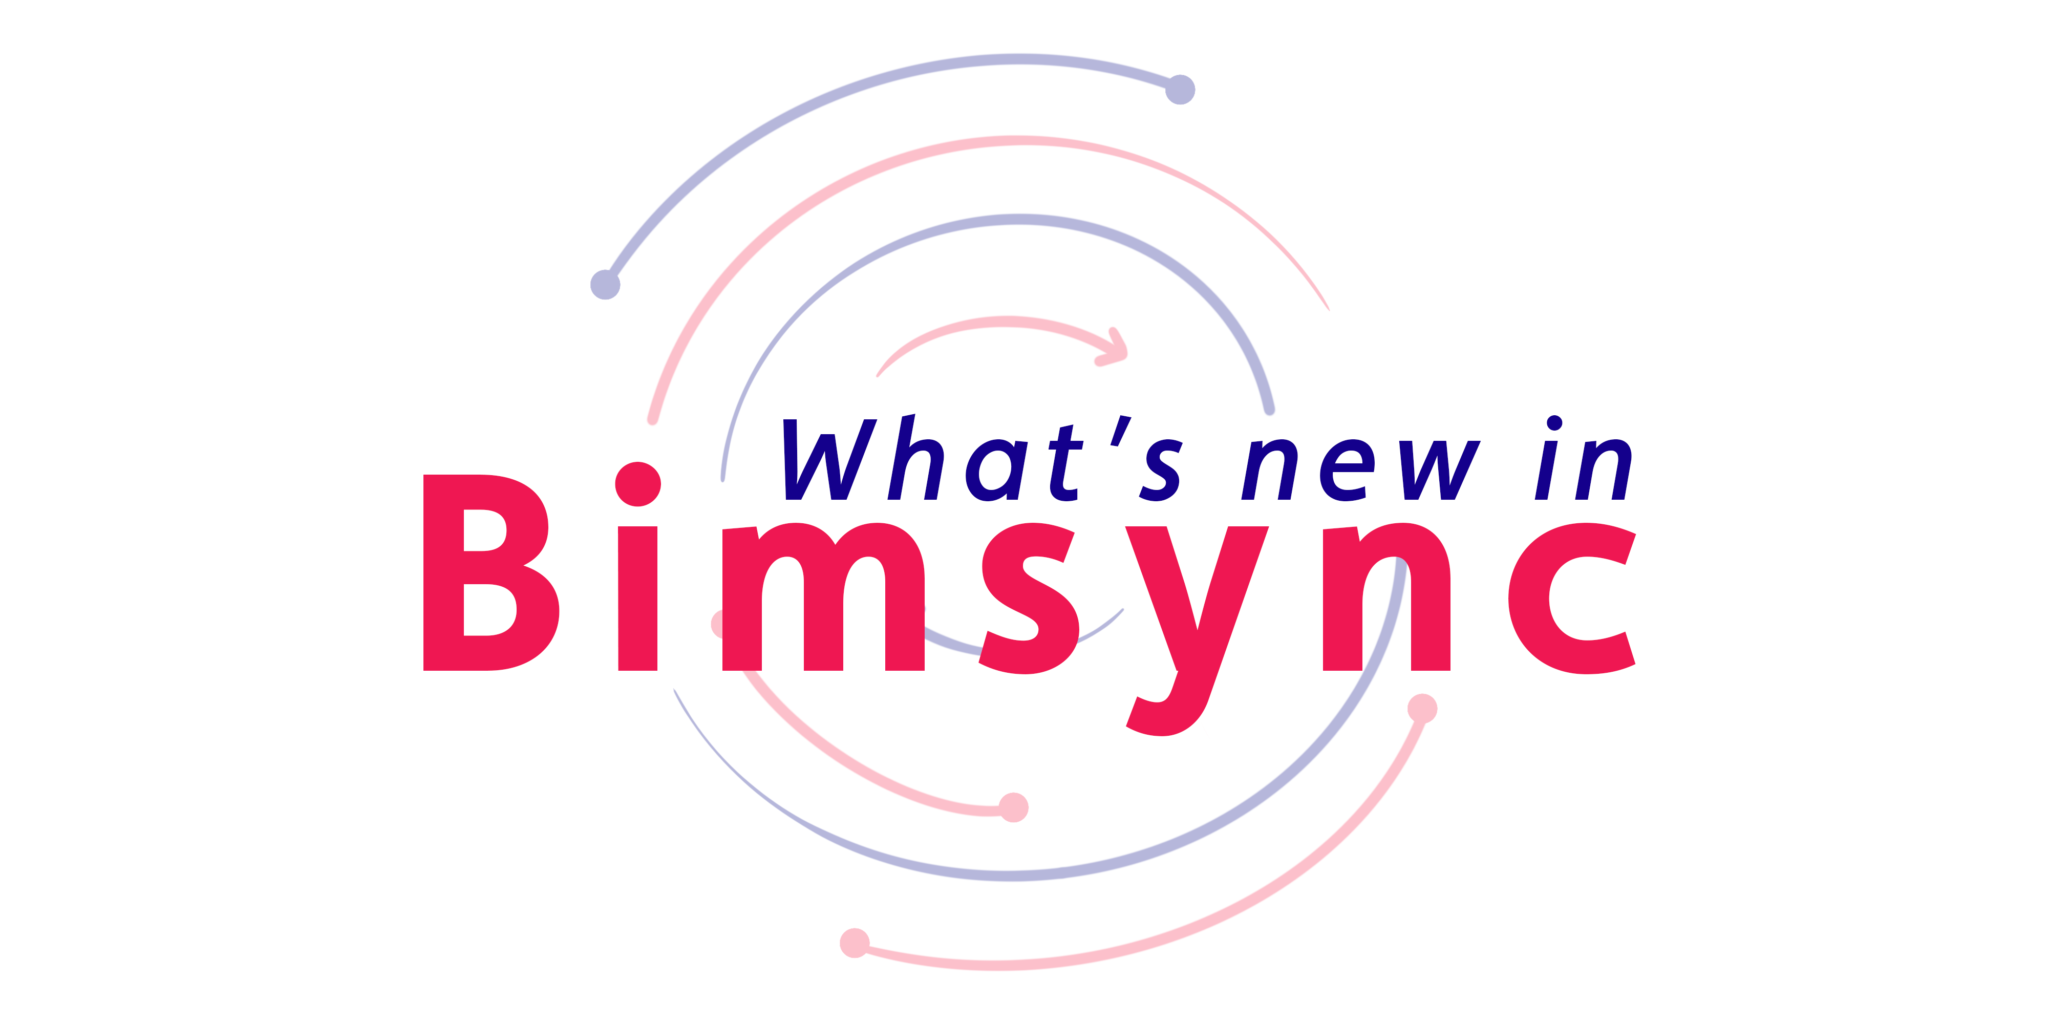 Bimsync (now Catenda) logo with 'What's new in Bimsync' written in it